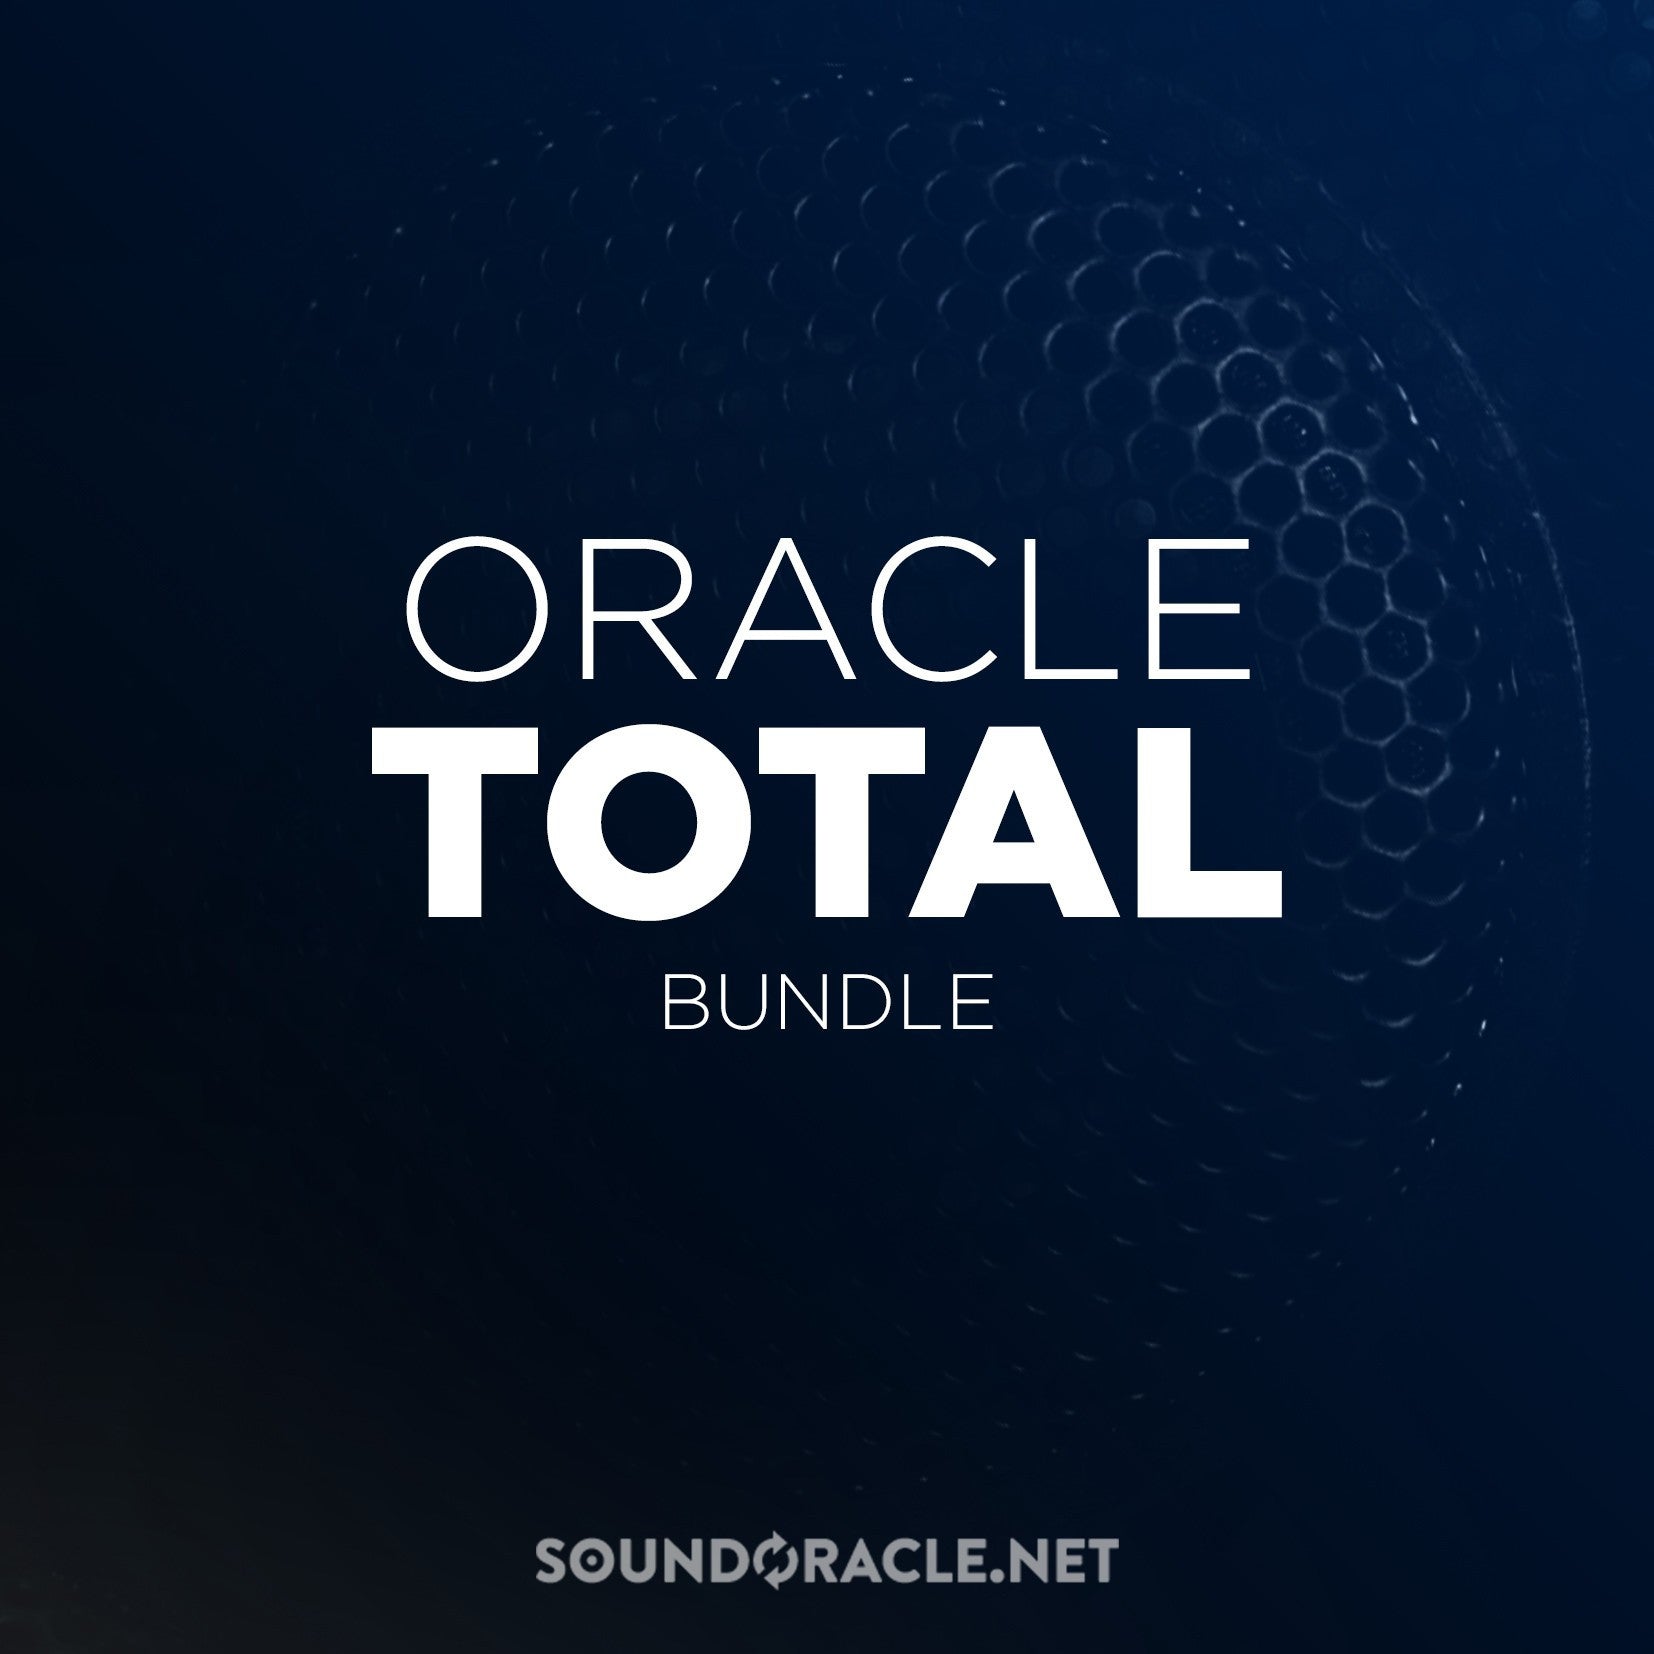 The Oracle Total Bundle - Soundoracle.net